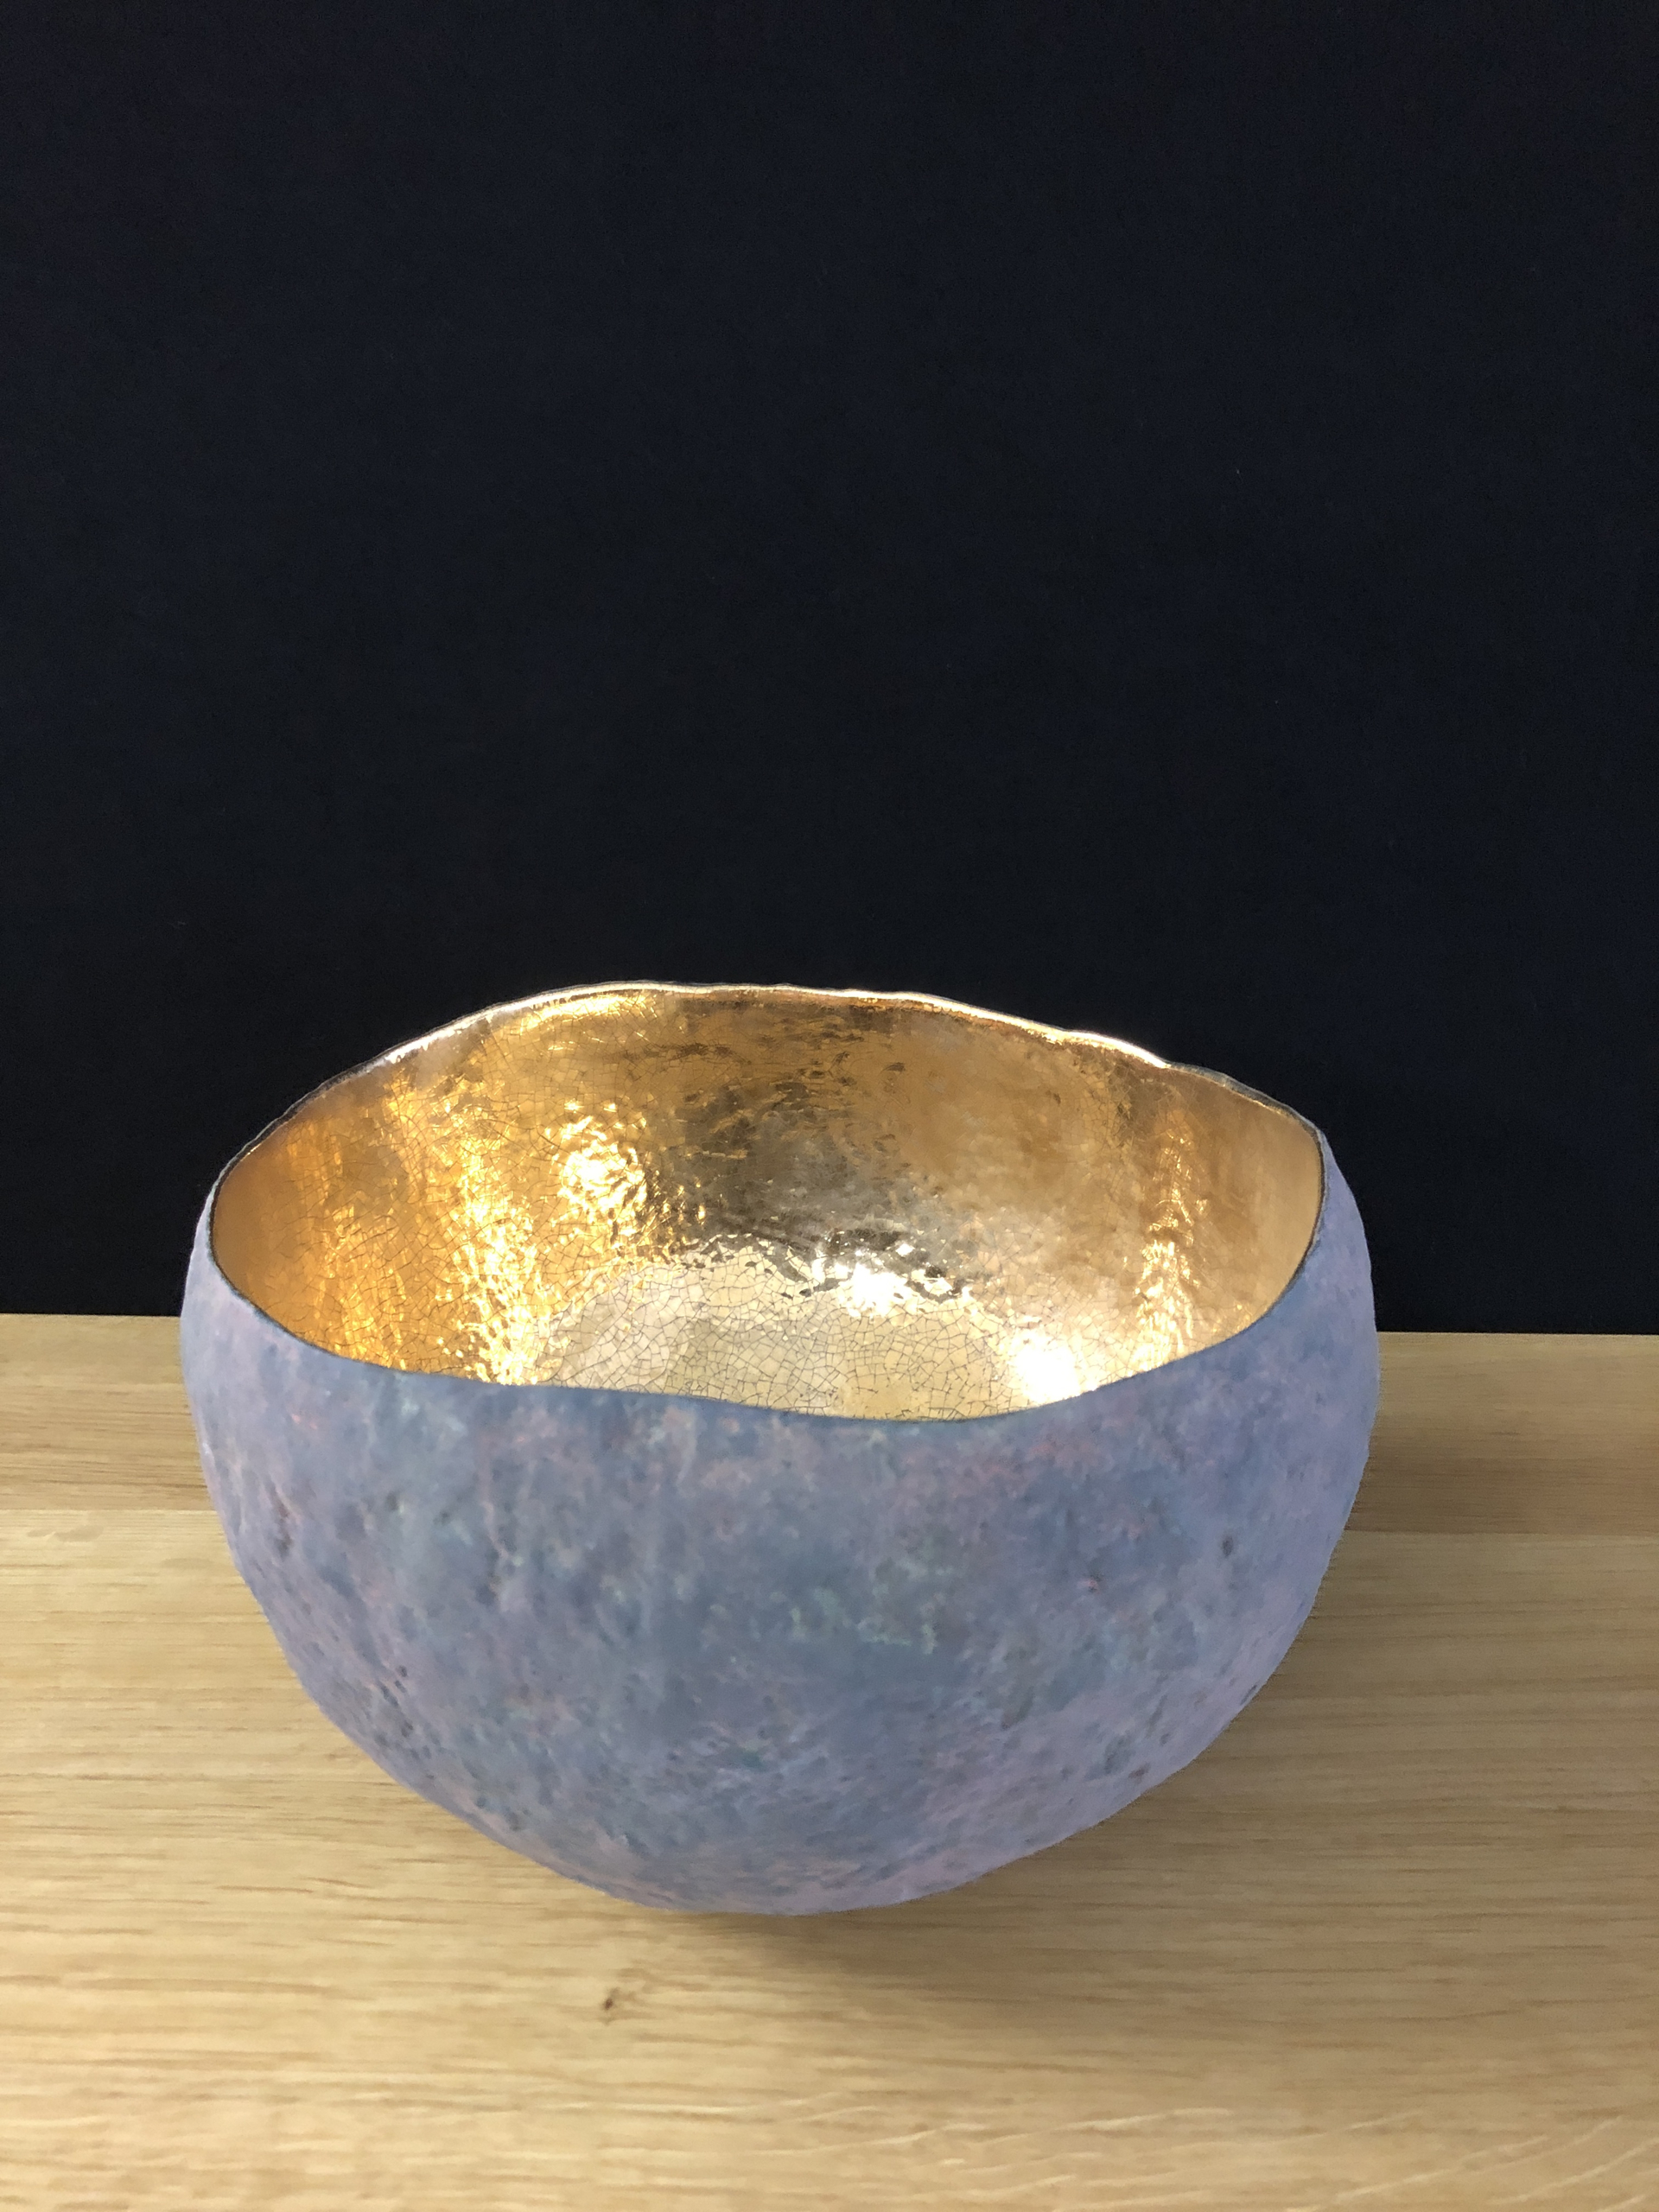 Medium size bowl by Cristina Salusti